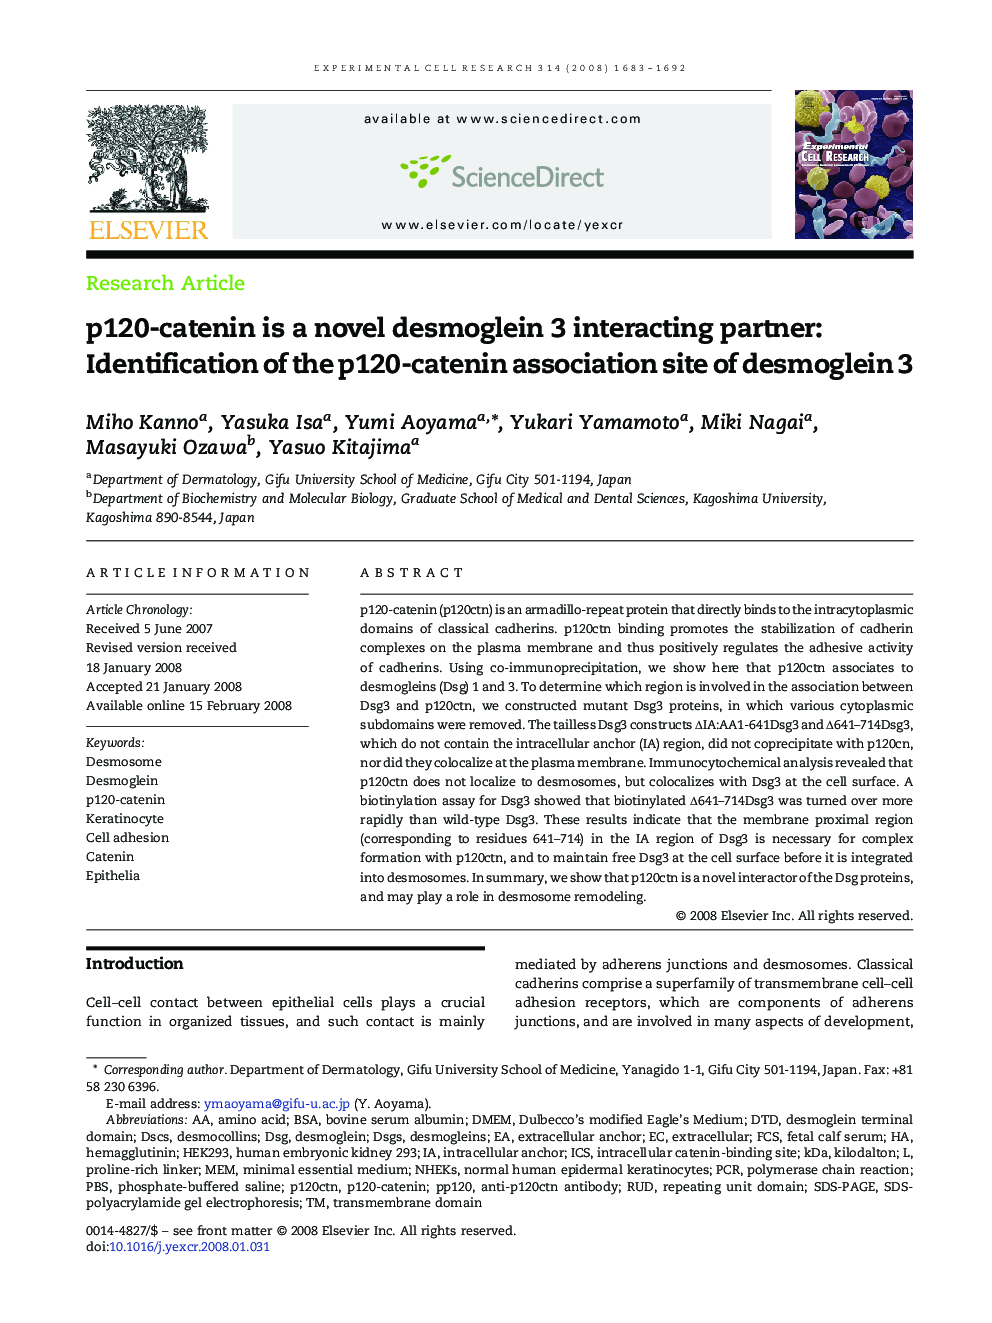 p120-catenin is a novel desmoglein 3 interacting partner: Identification of the p120-catenin association site of desmoglein 3